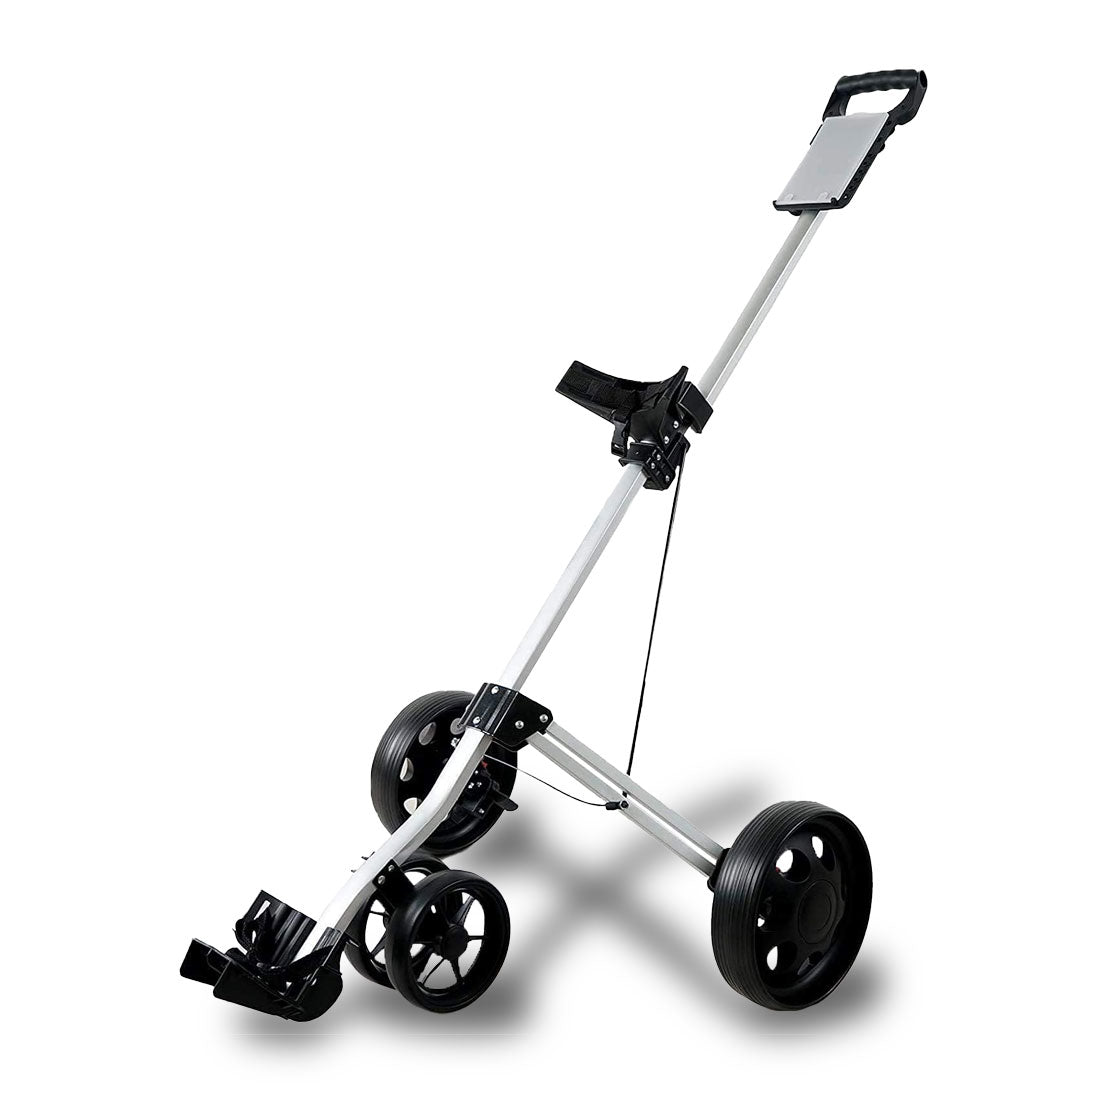 4 Wheels Foldable Aluminum Golf Club Buggy Trolley Cart Push Pull Footbrake Accessories